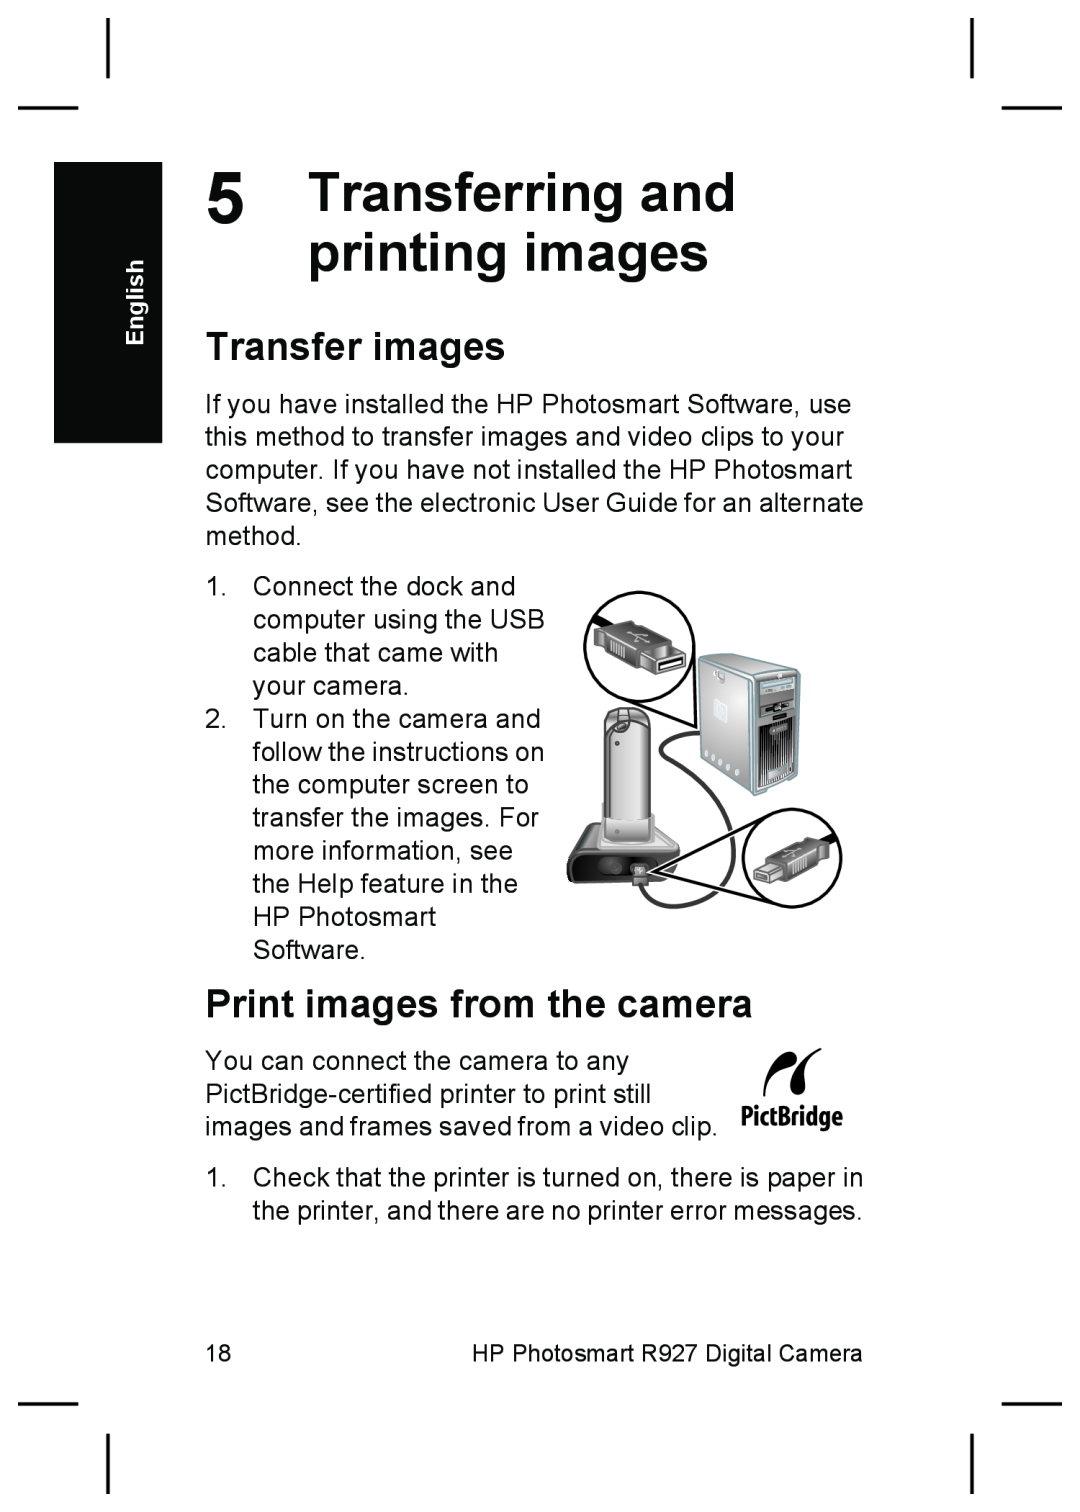 HP R927 manual Transferring and printing images, Transfer images, Print images from the camera 